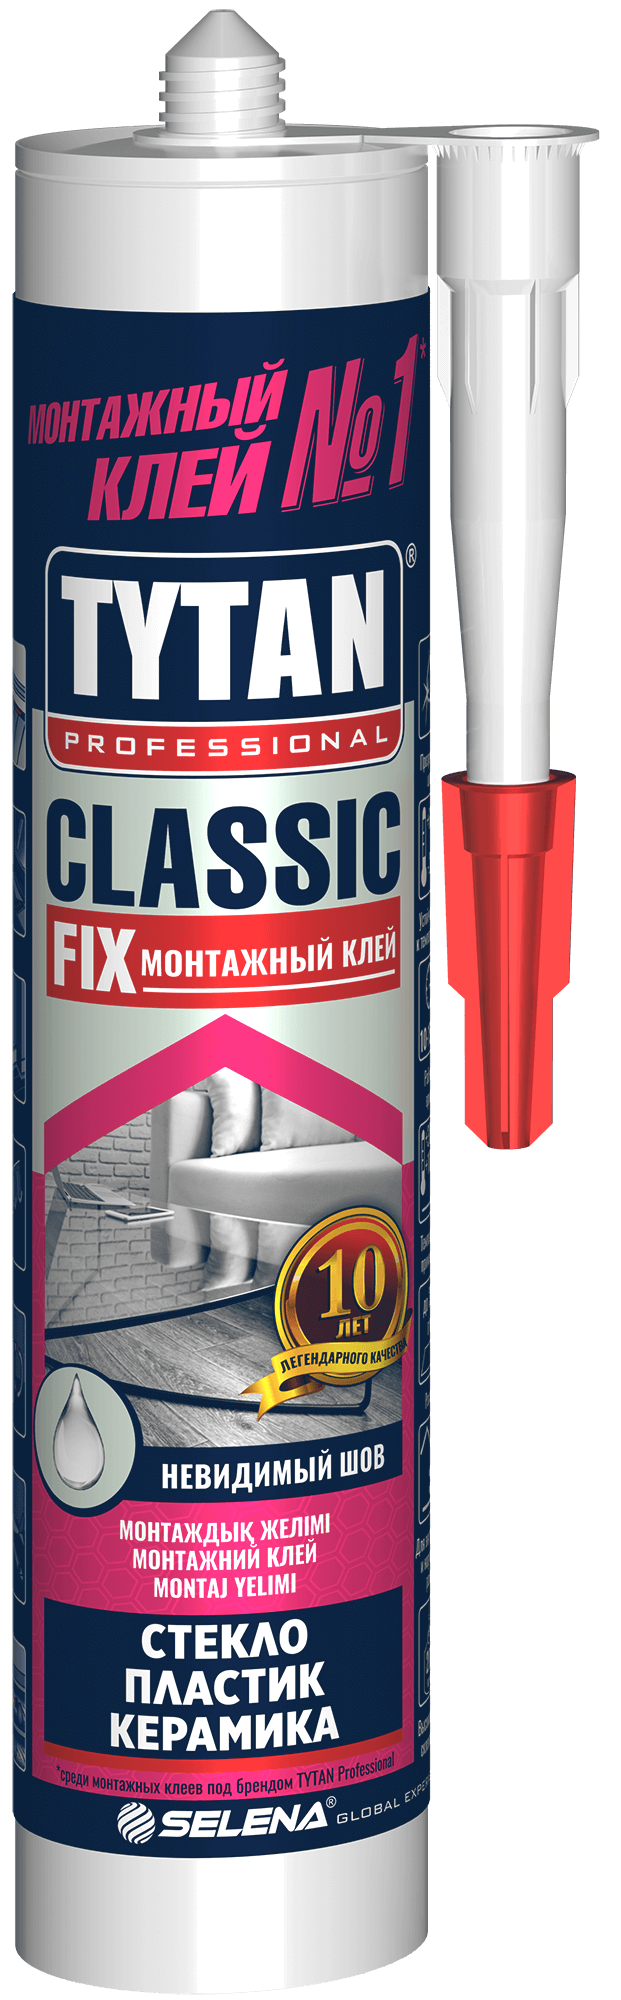 Монтажный  CLASSIC FIX - Tytan Professional